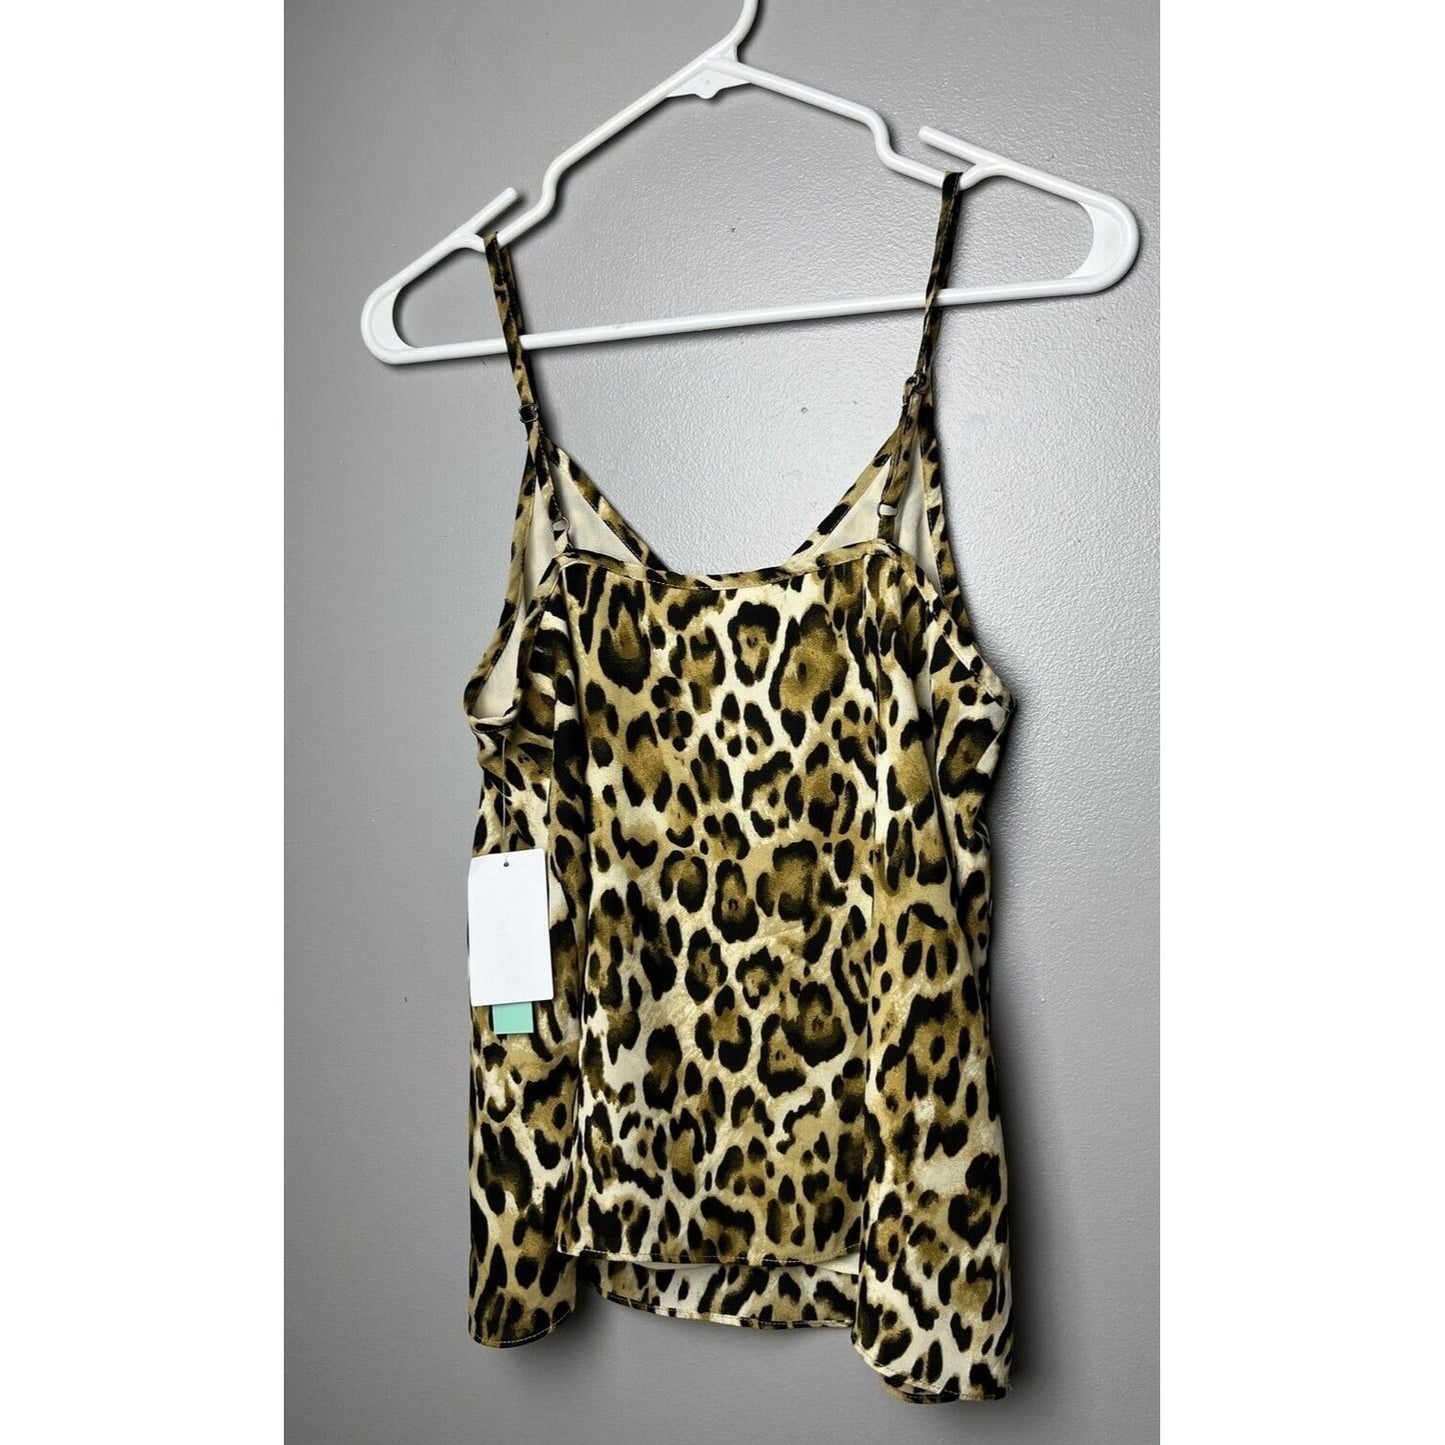 NEW Abound Leopard Print V-Neck Camisole Top